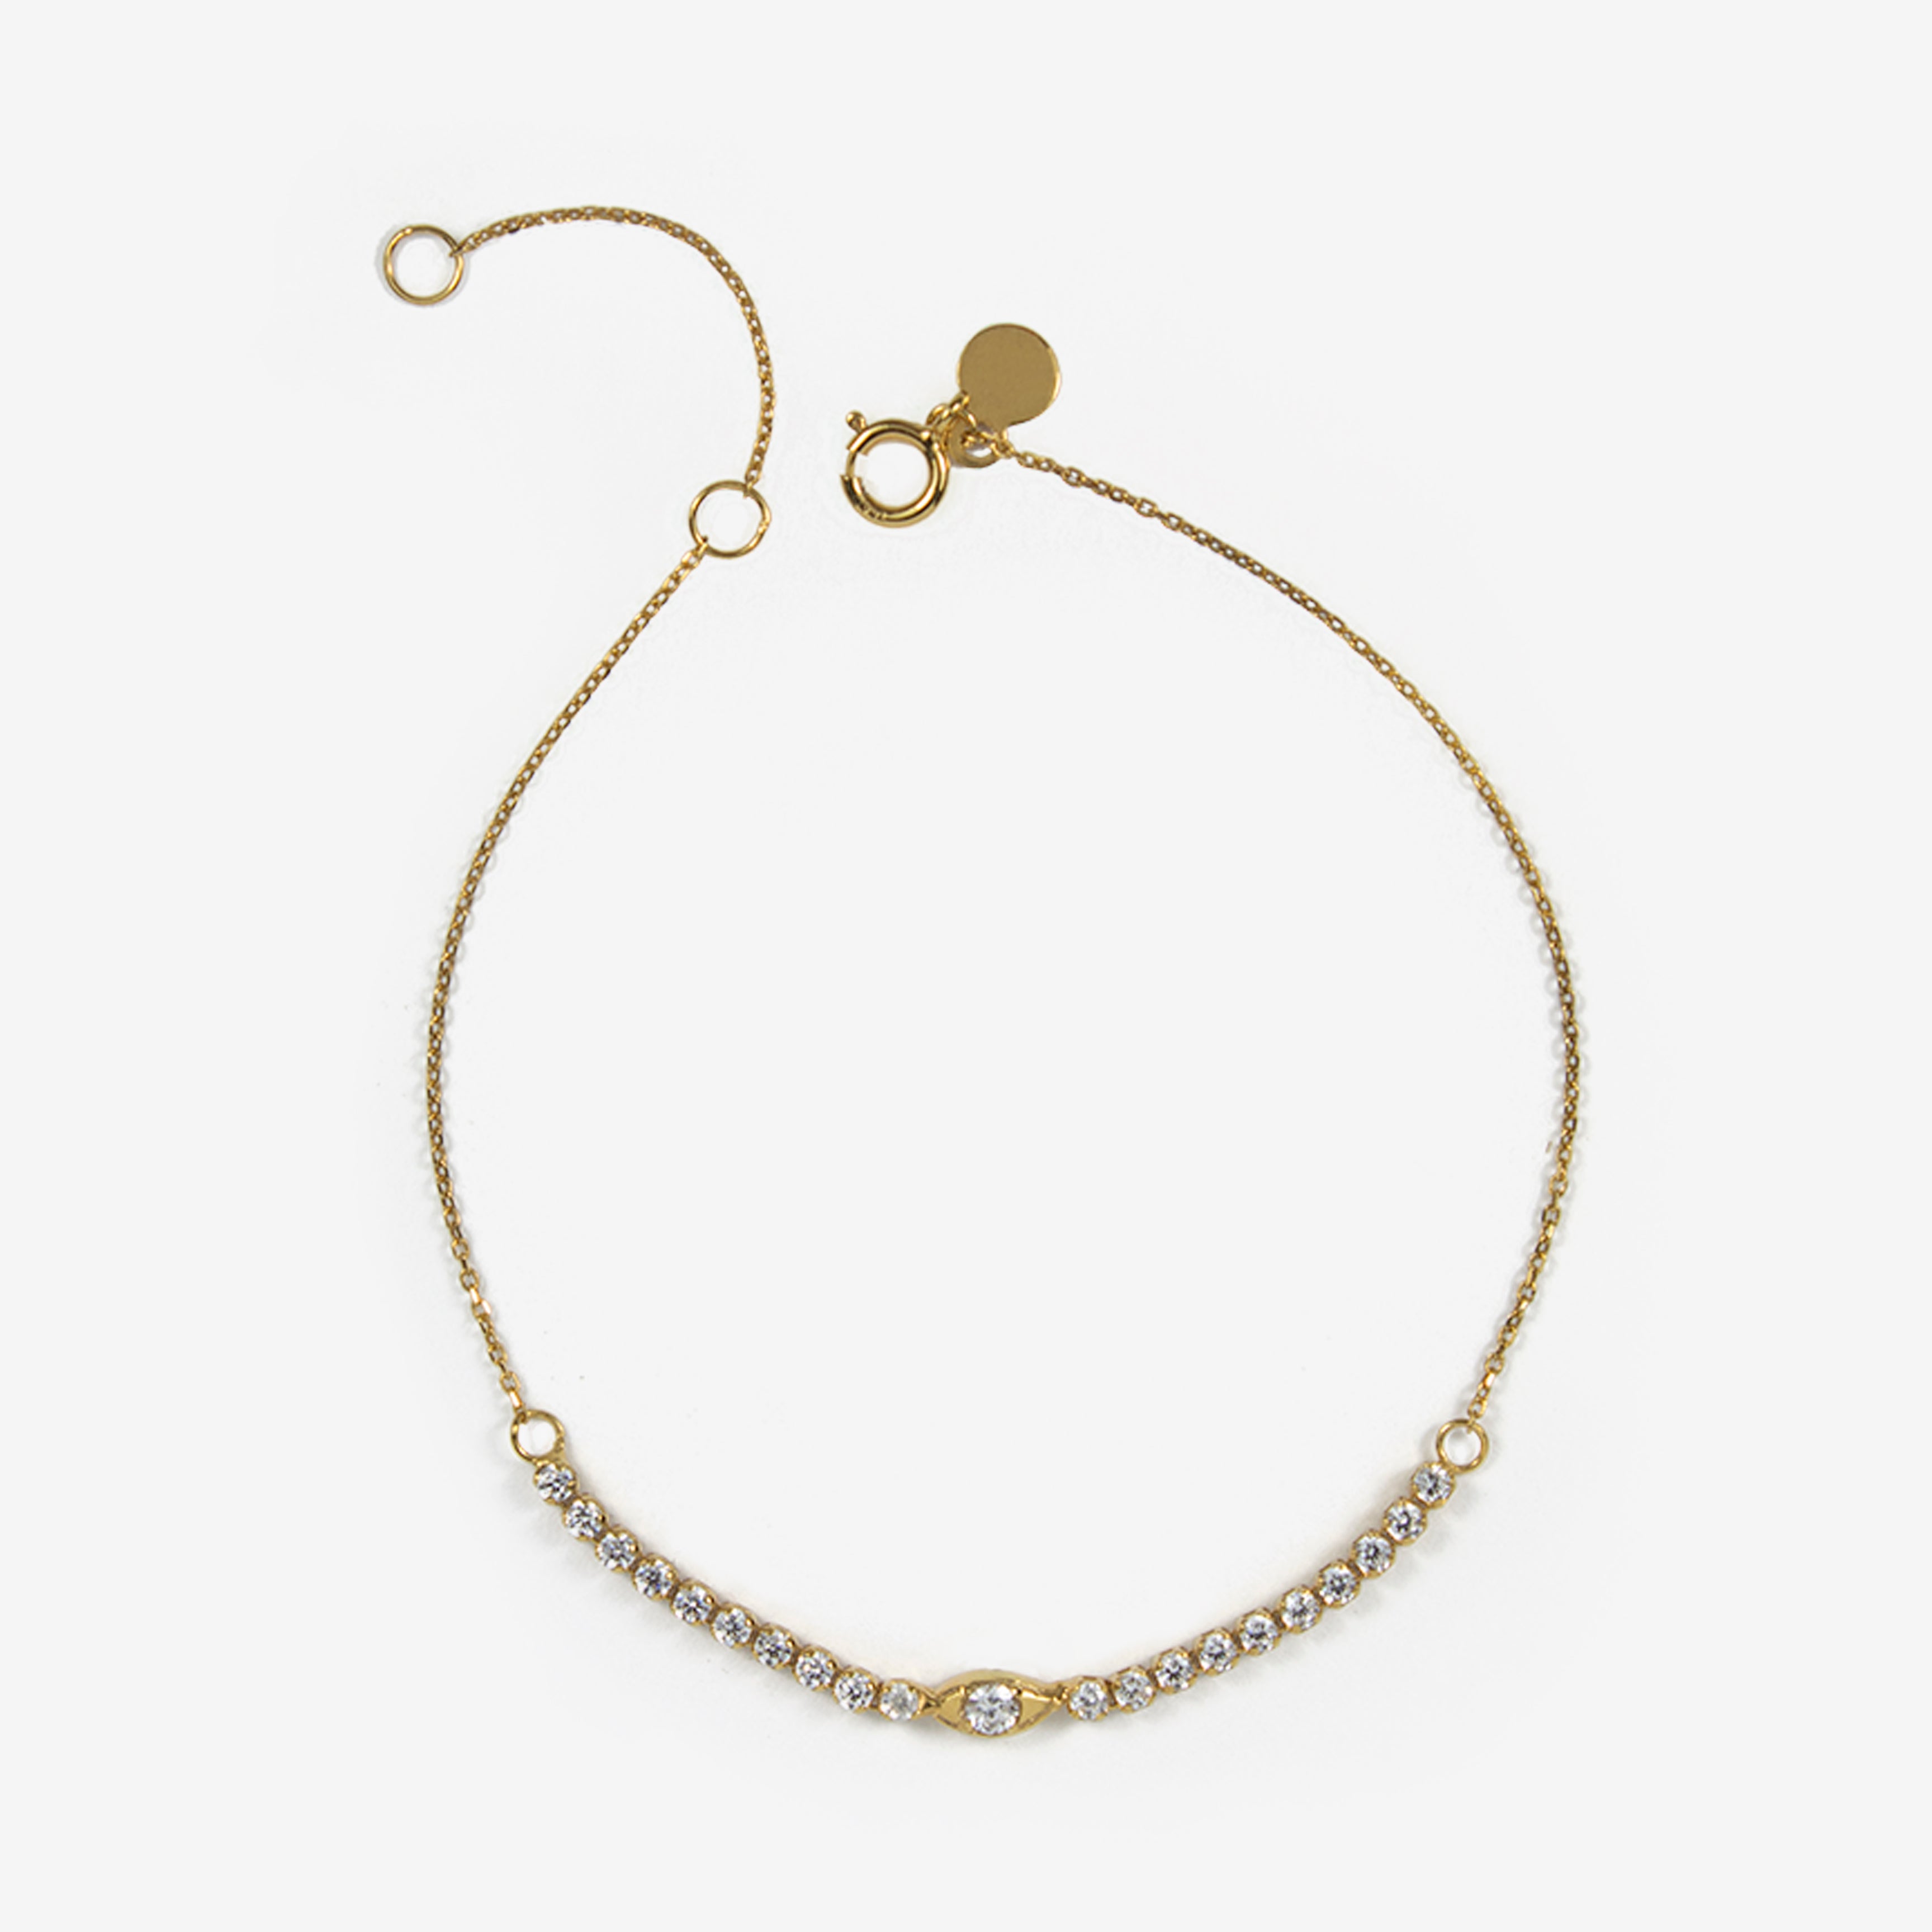 Gold Evil Eye Zart Bracelet - by Claurete Jewelry at Claurete.com